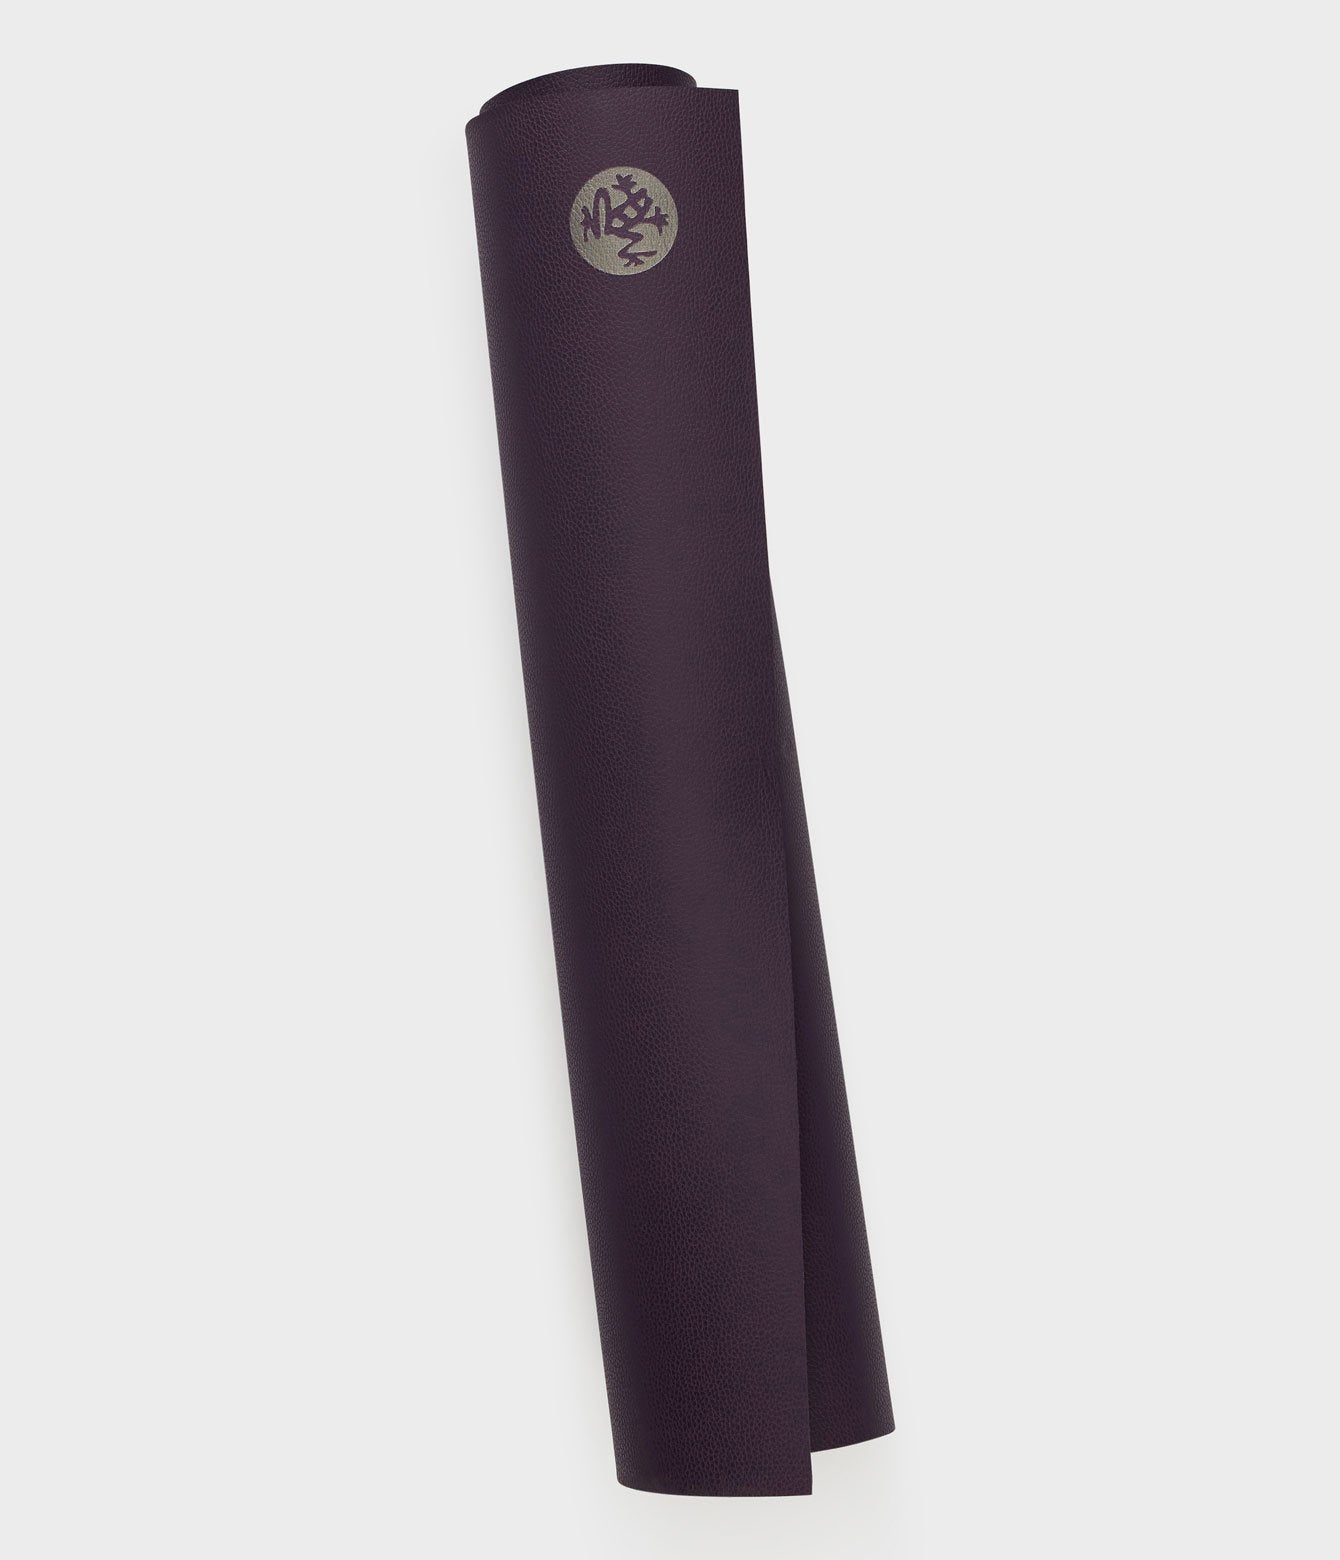 GRP Lite Hot Yoga Mat 4mm by Manduka – Yoga Accessories